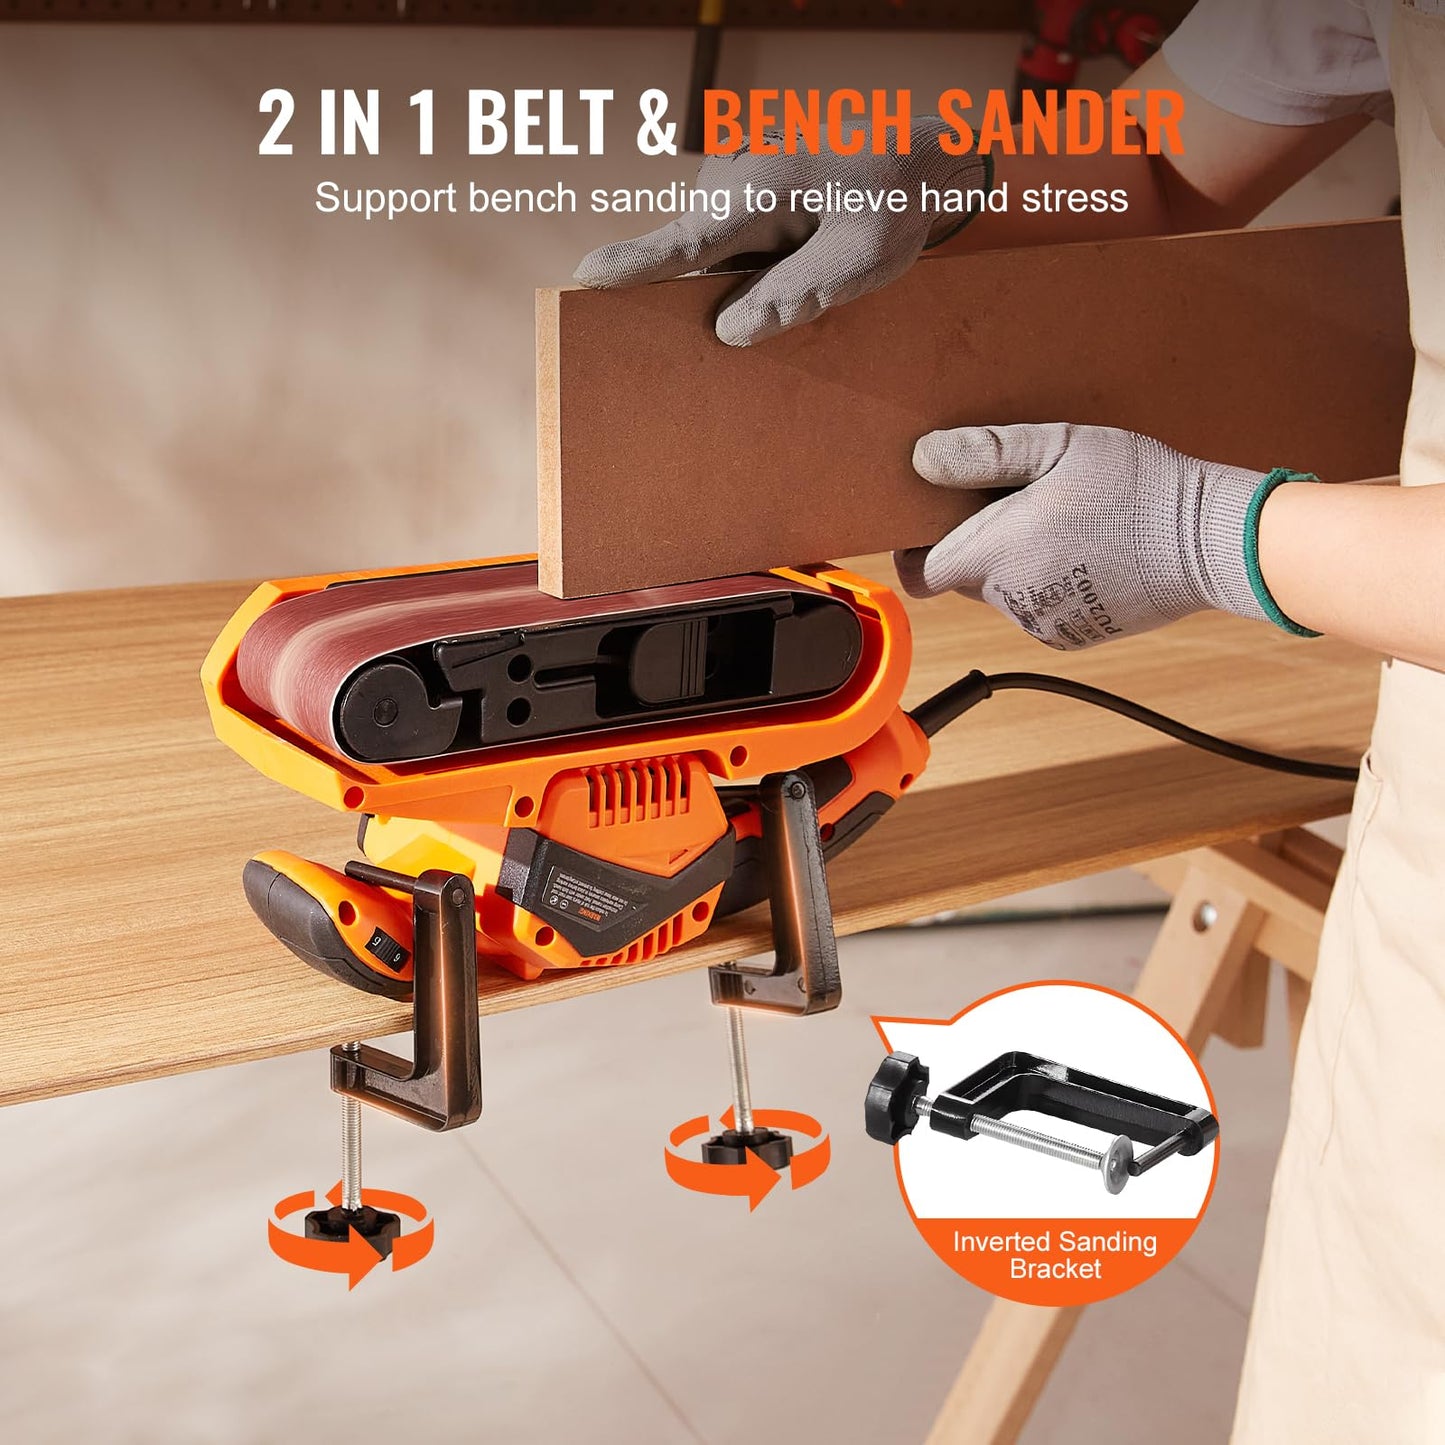 VEVOR 7AMP Belt Sander, 3" x 21" Belt Sanders for Woodworking with 6 Speeds 152-320 m/min, Powerful Bench Sander Machine with 2 in 1 Vacuum Adapter,